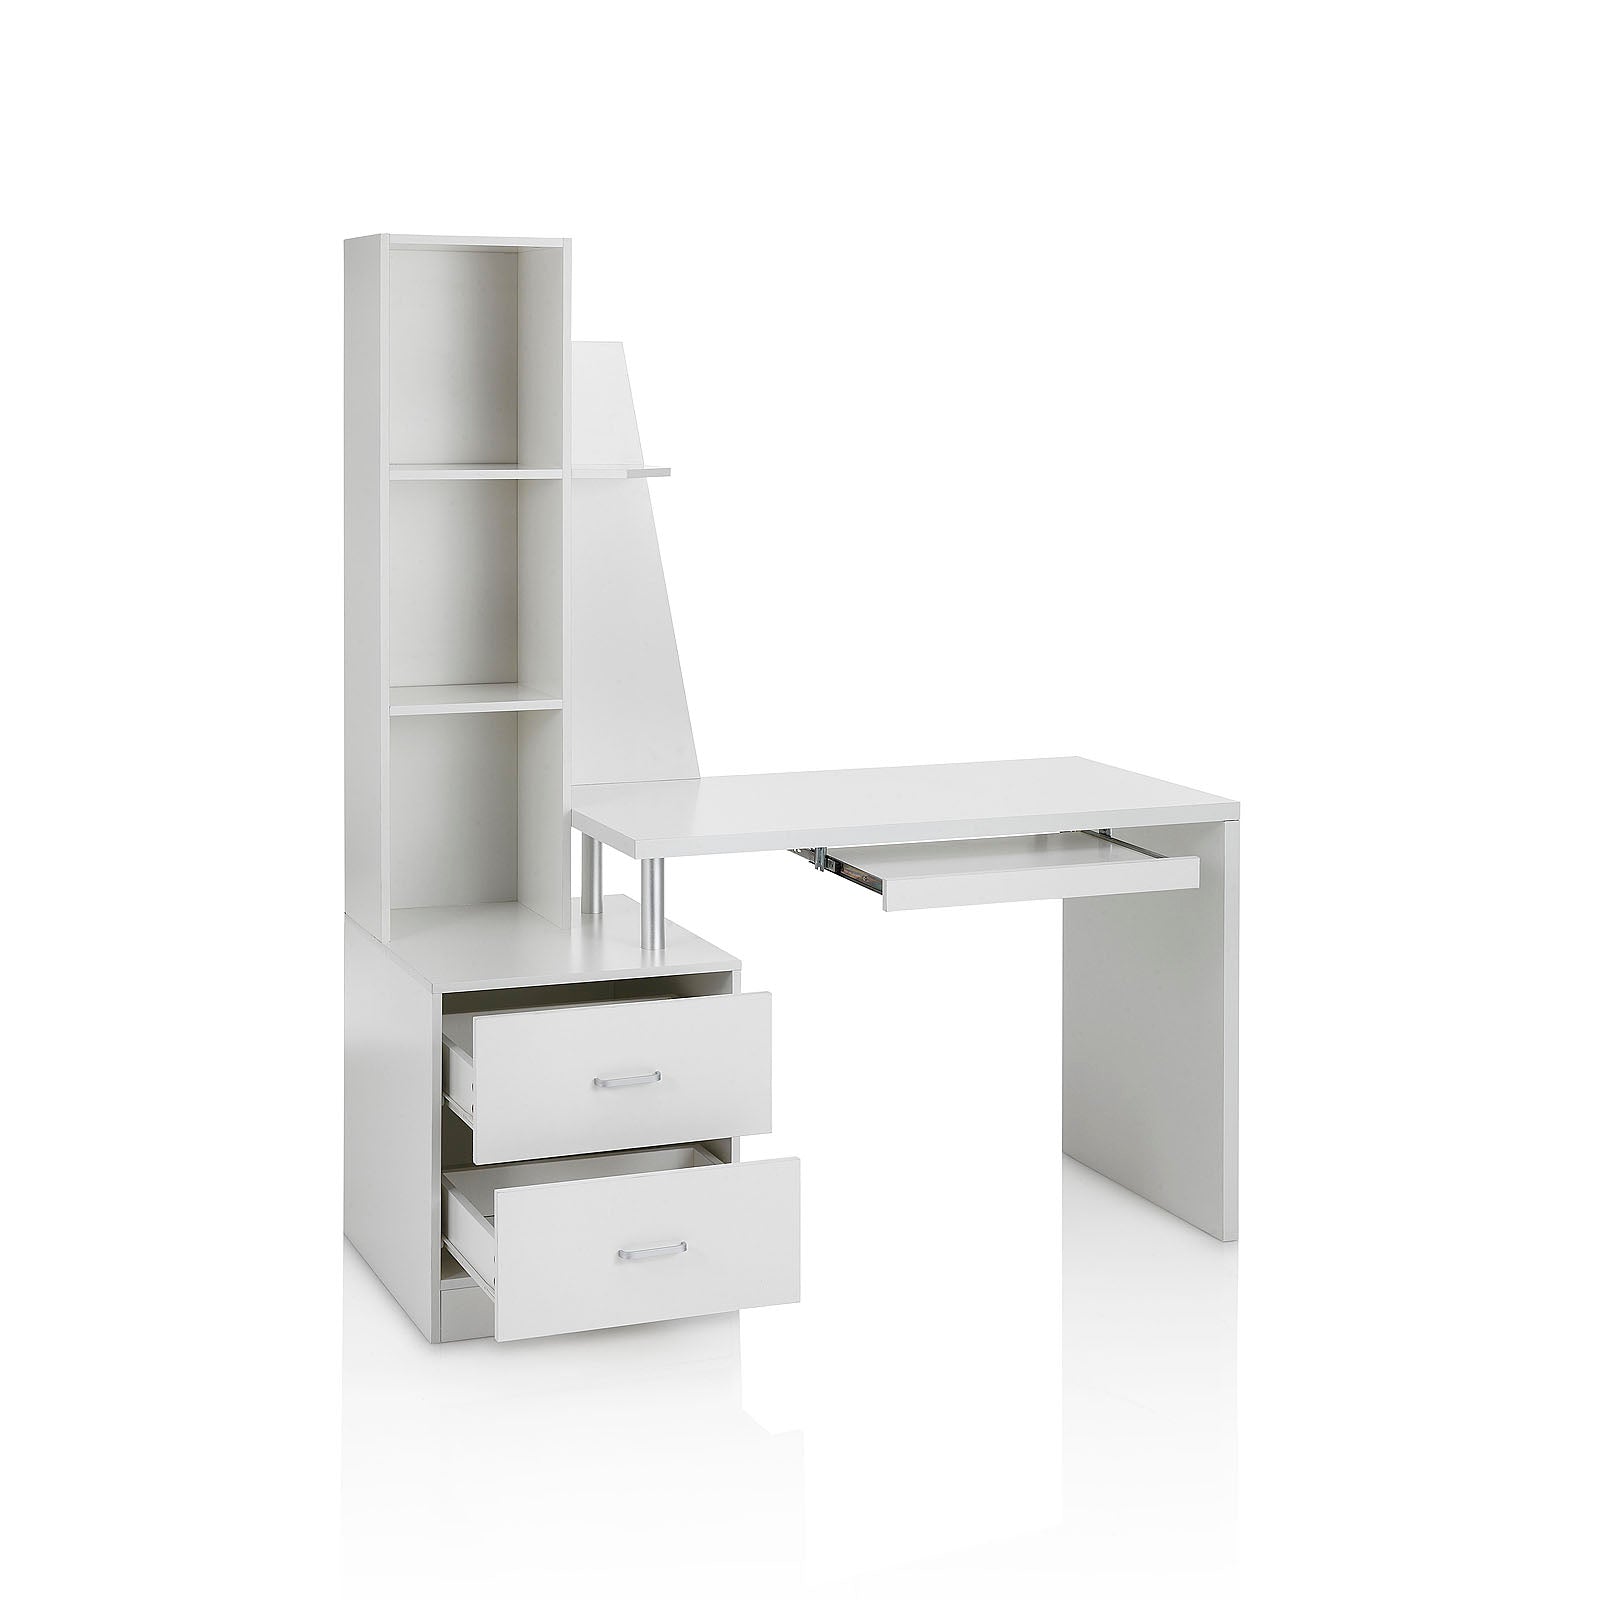 LÄRANDE scrivania con elemento estraibile, bianco, 120x58 cm - IKEA Italia